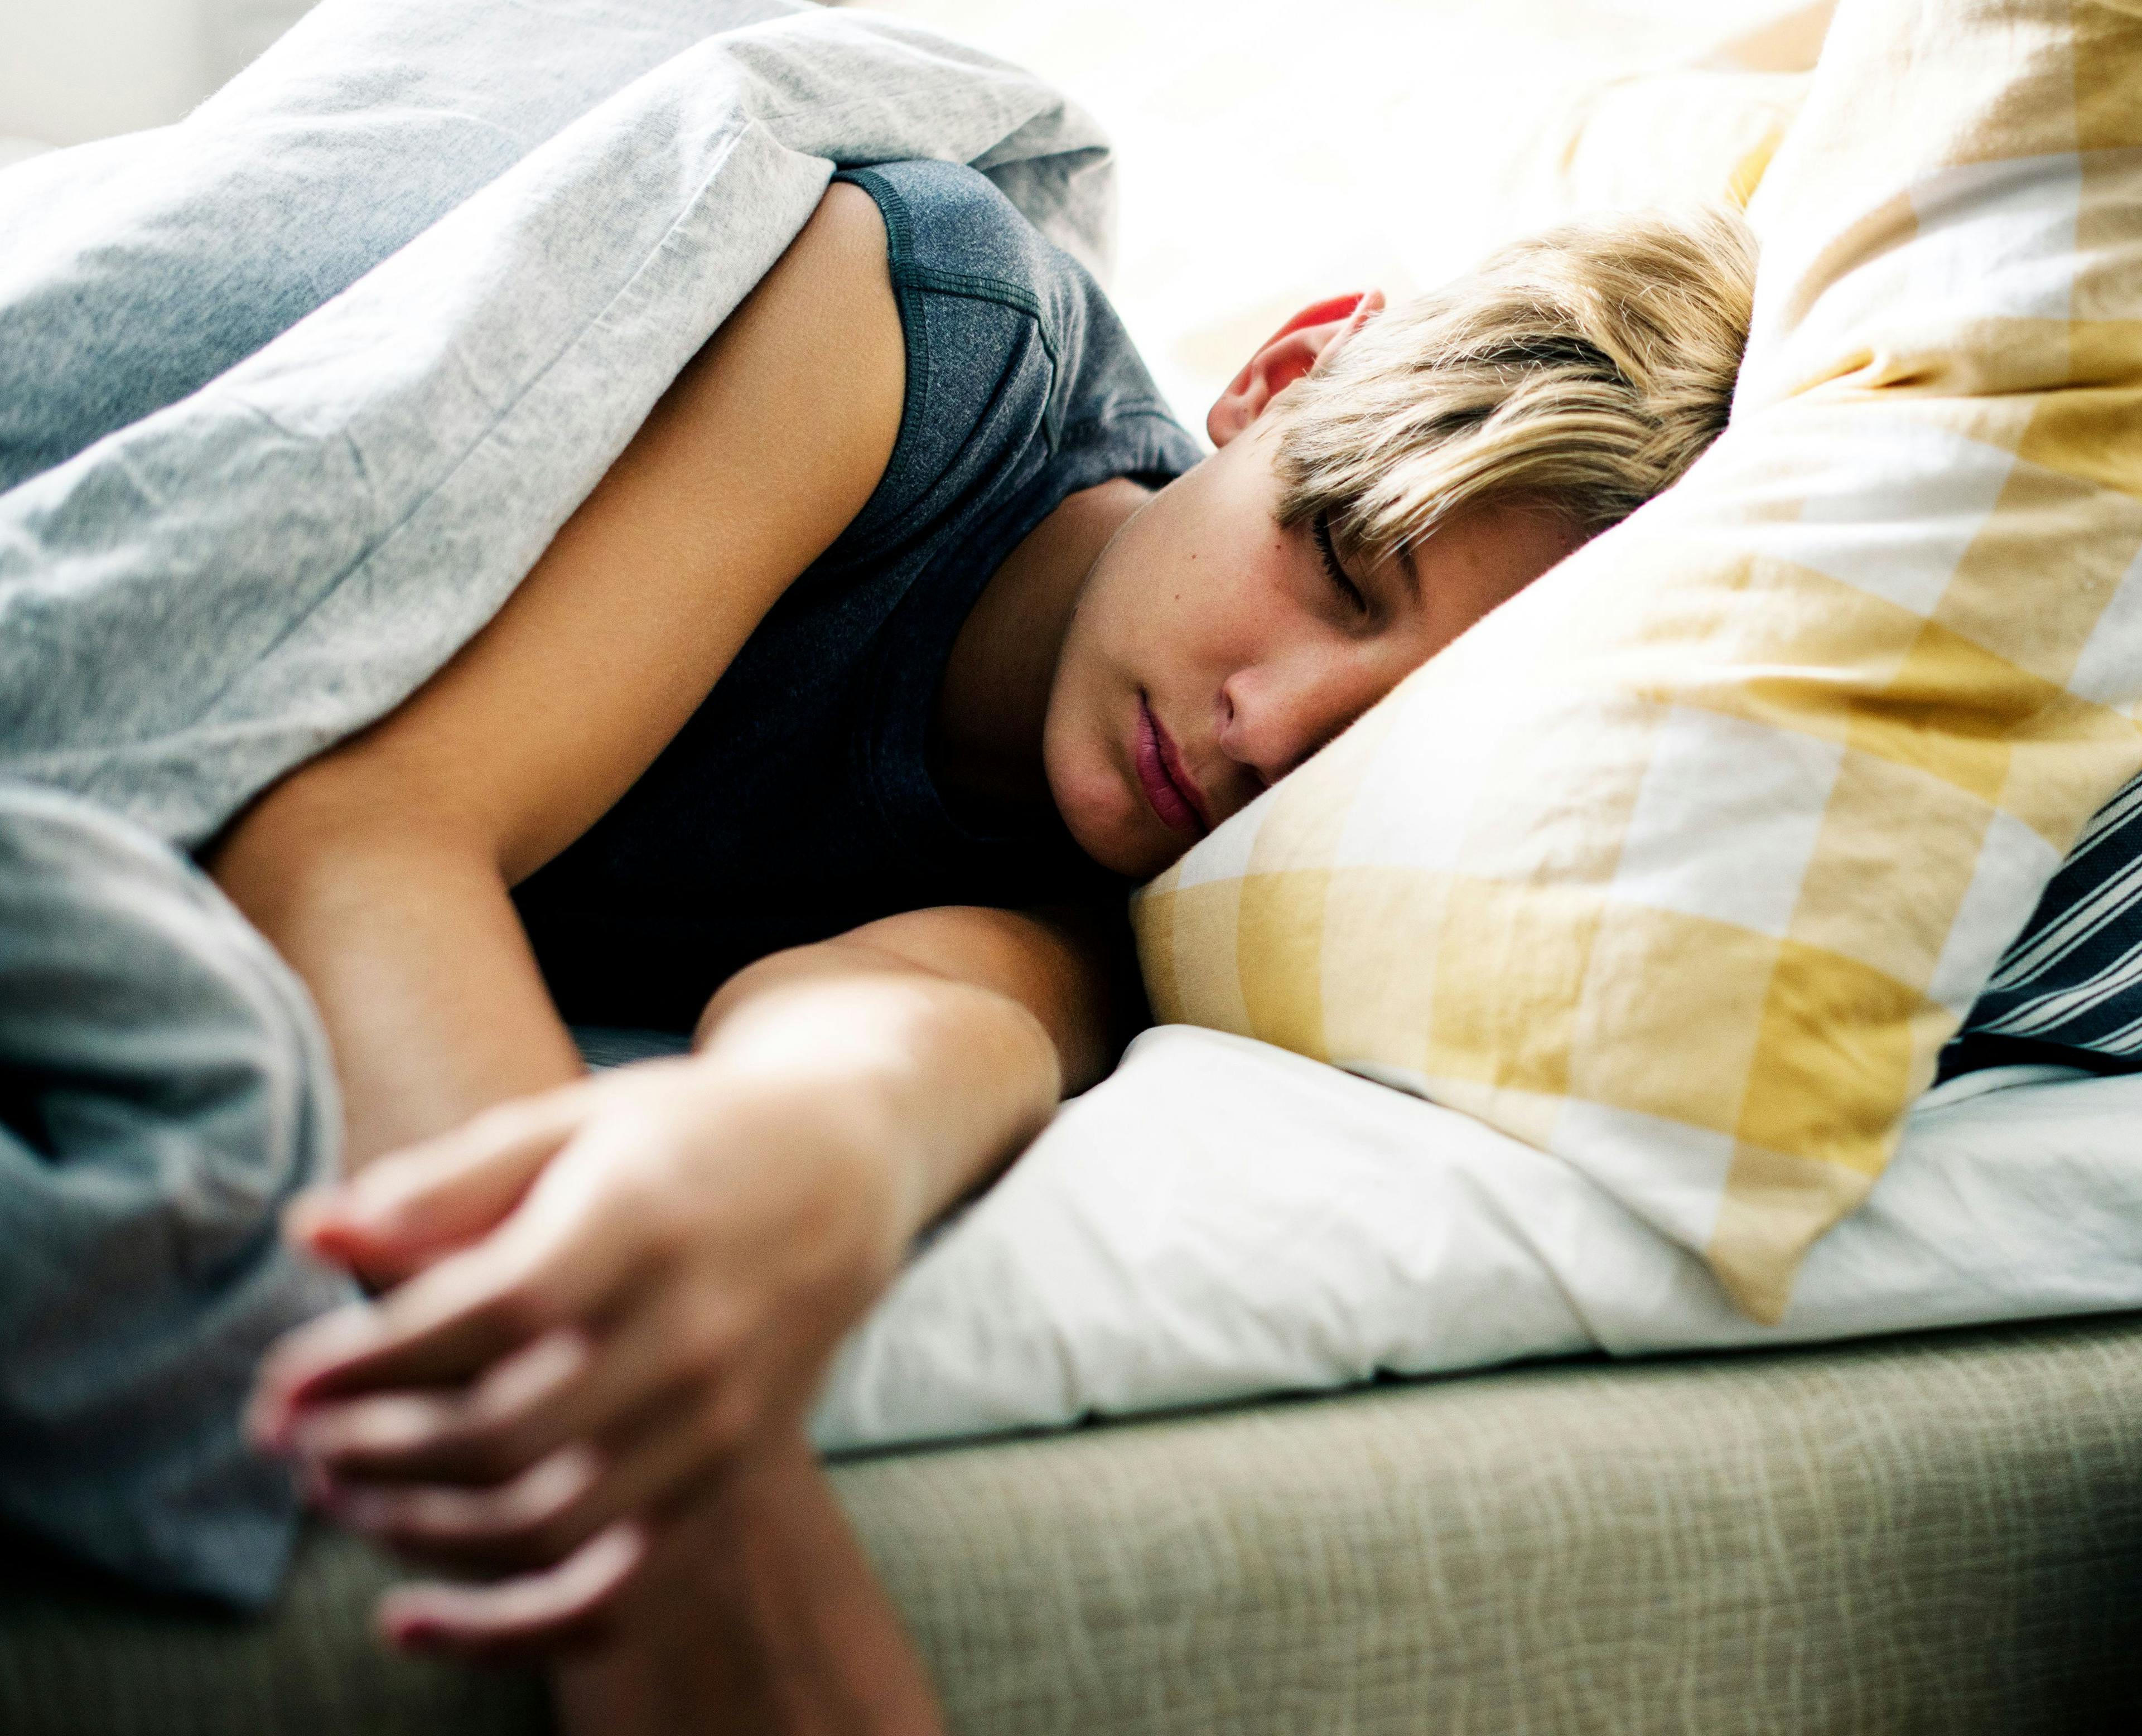 Sleeping adolescent patient | Image Credit: Rawpixel.com - stock.adobe.com